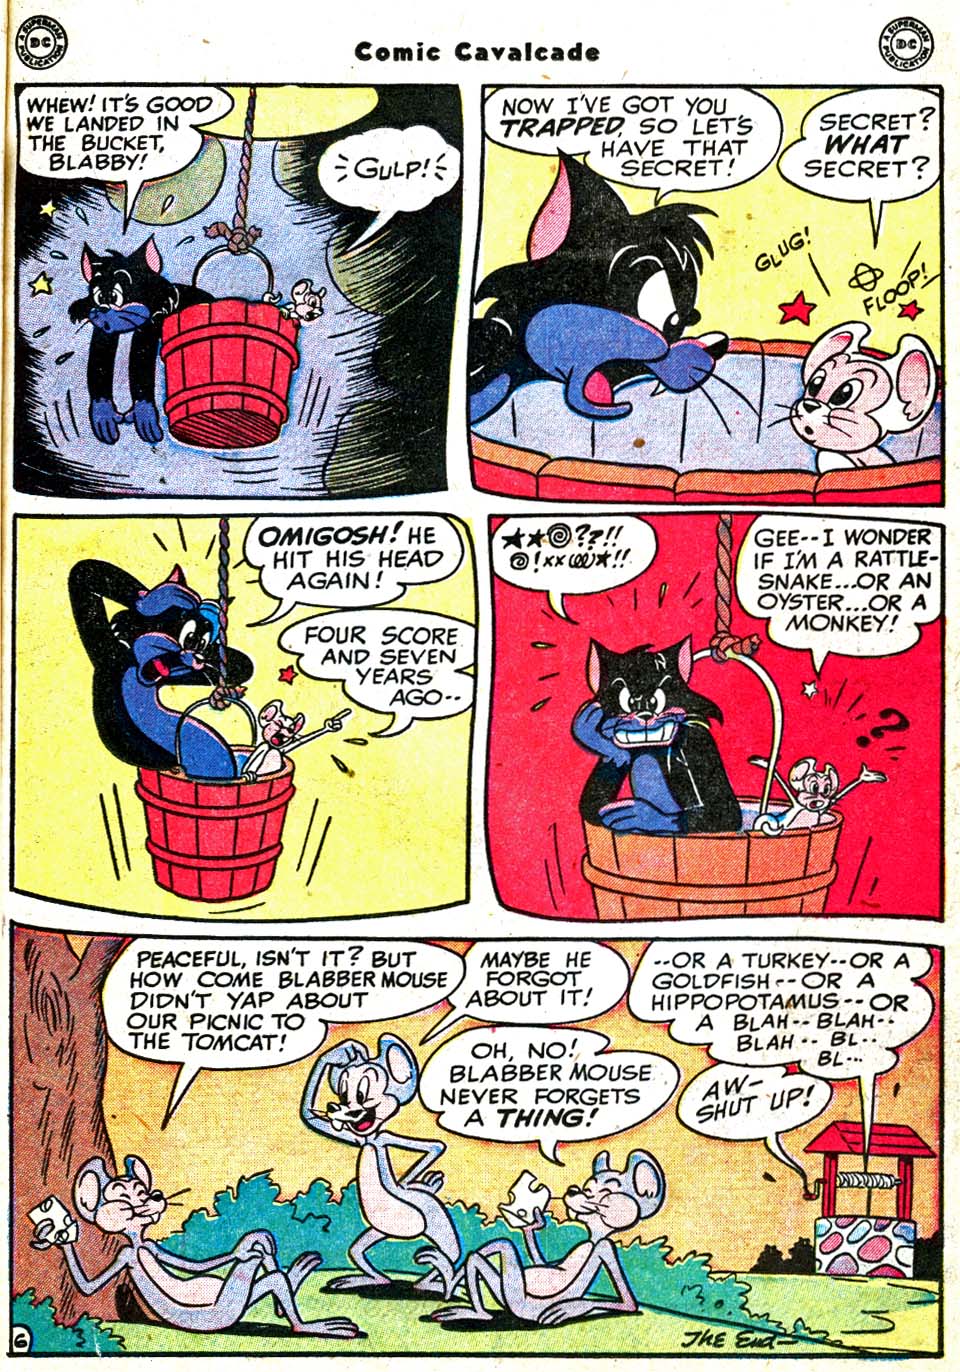 Comic Cavalcade issue 31 - Page 17